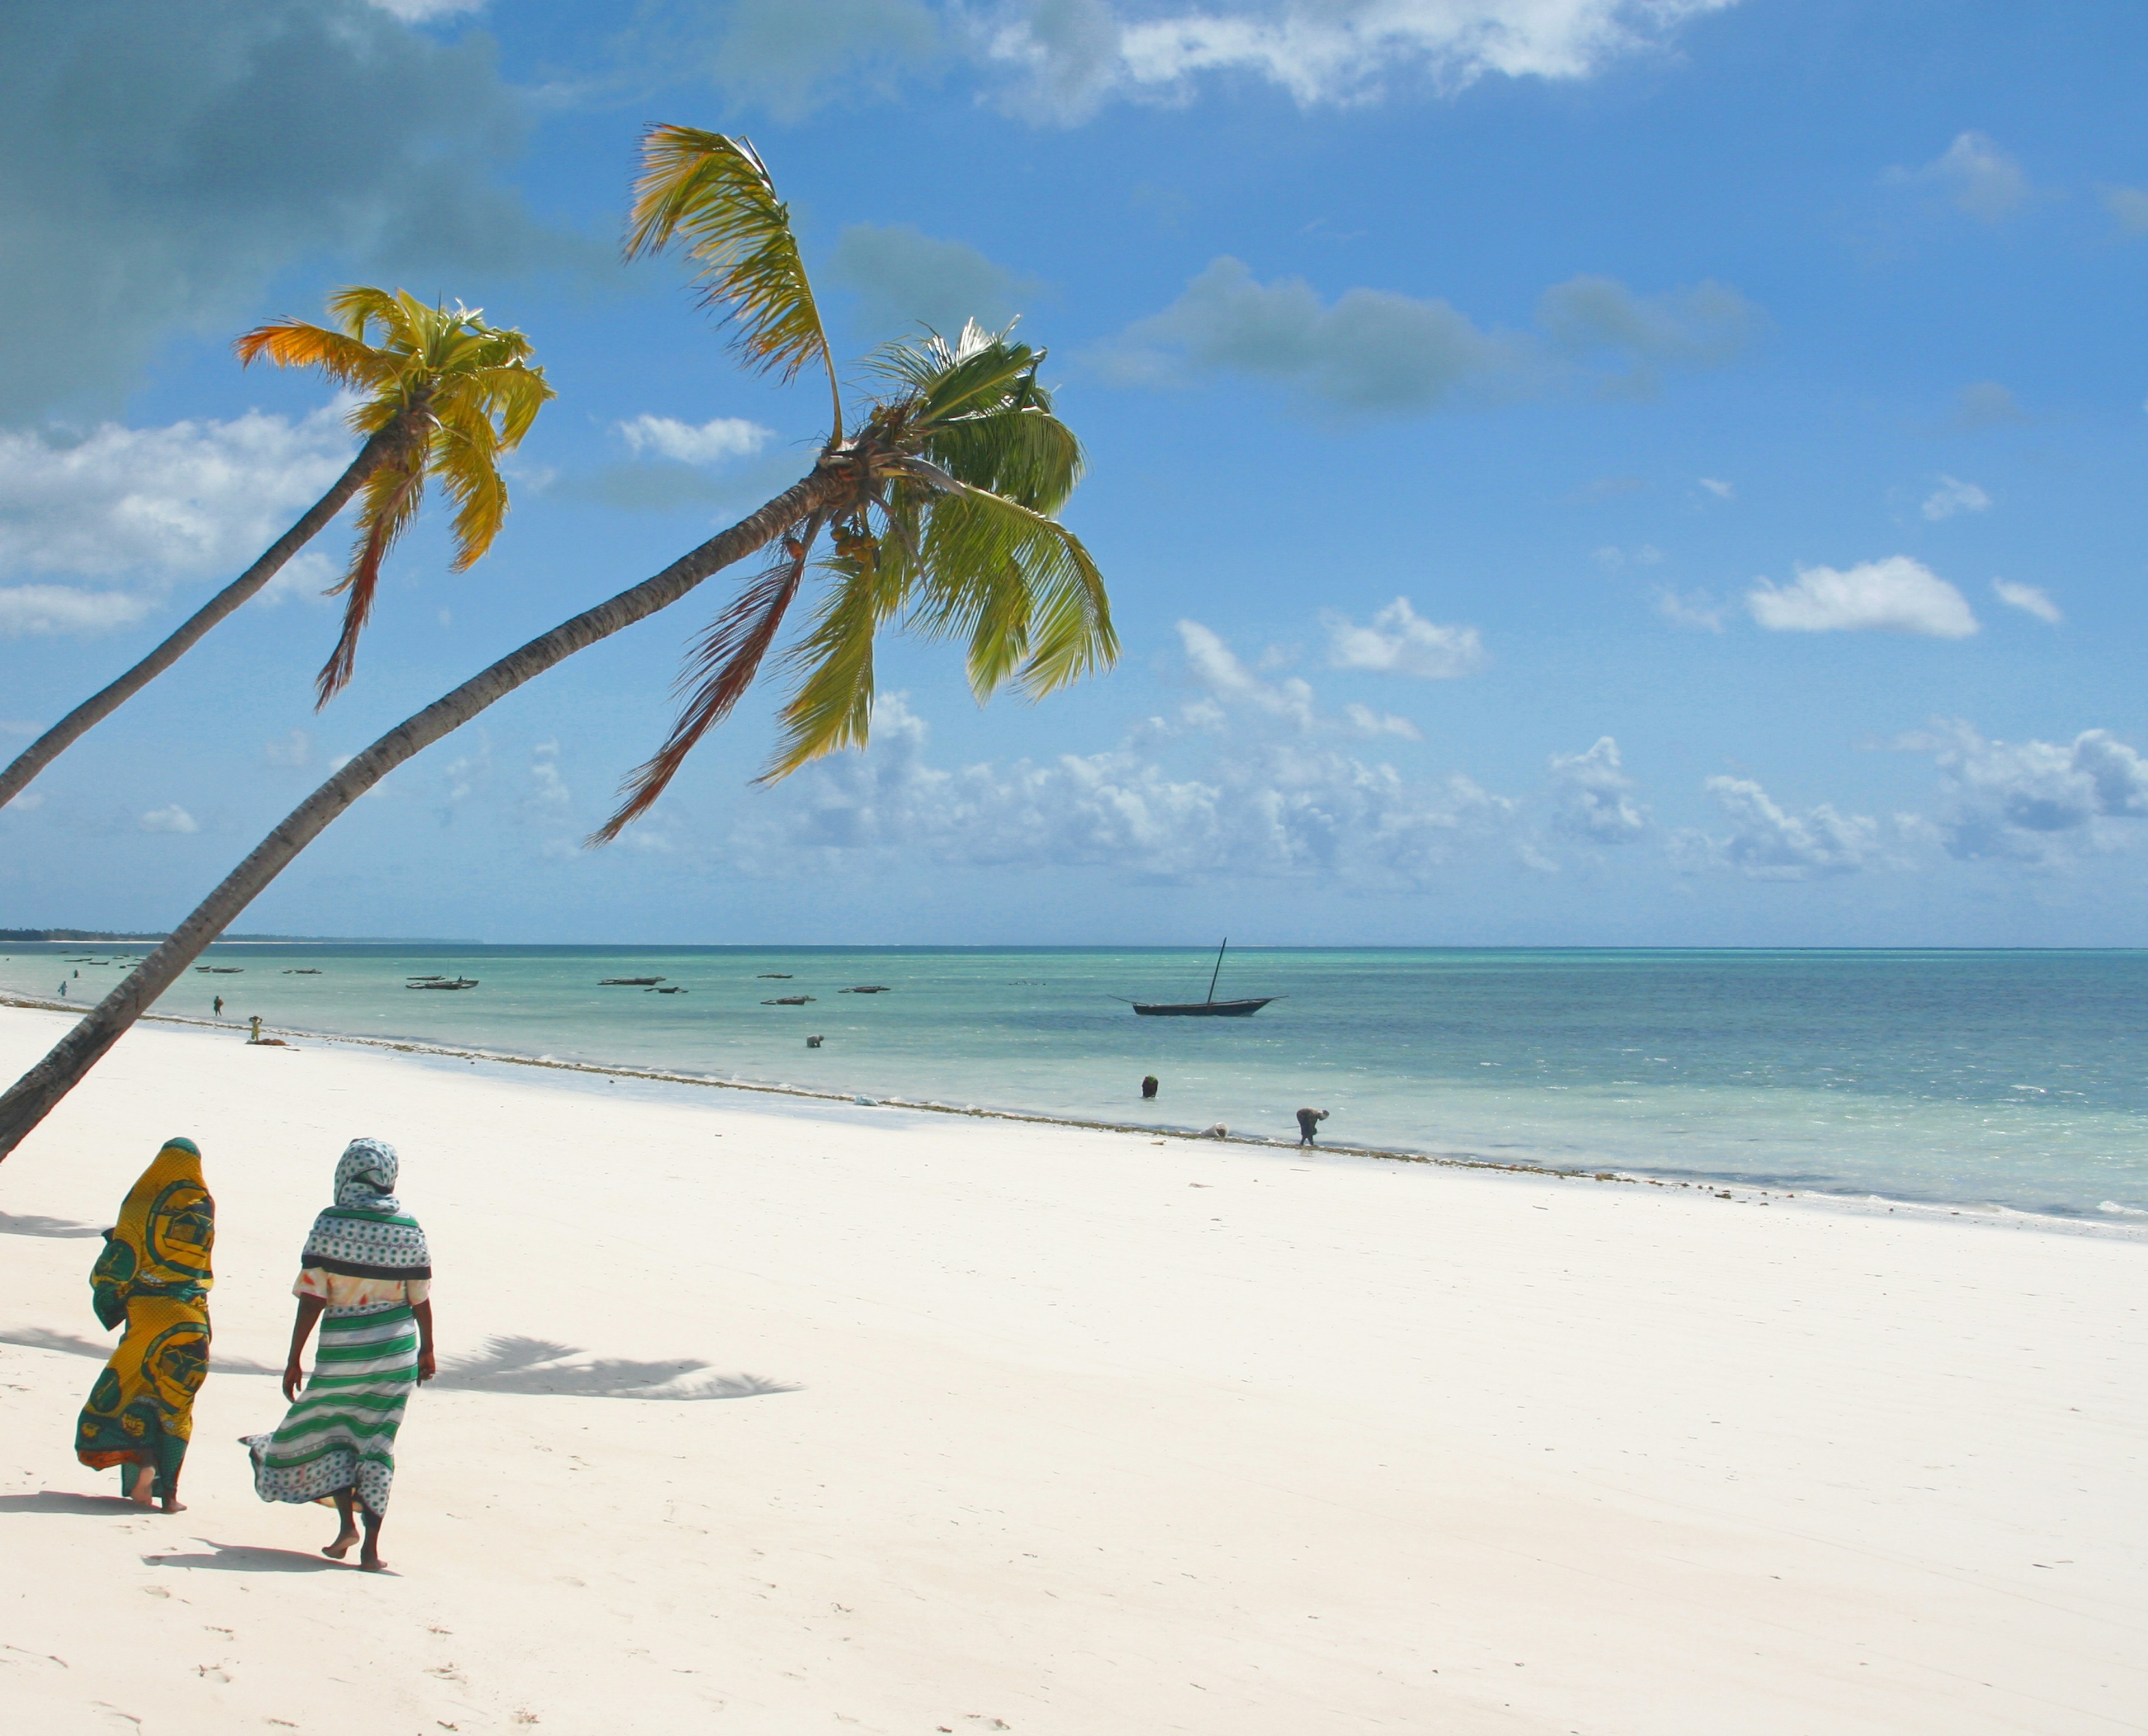 African women walk on the beach under palms on Zanzibar Island